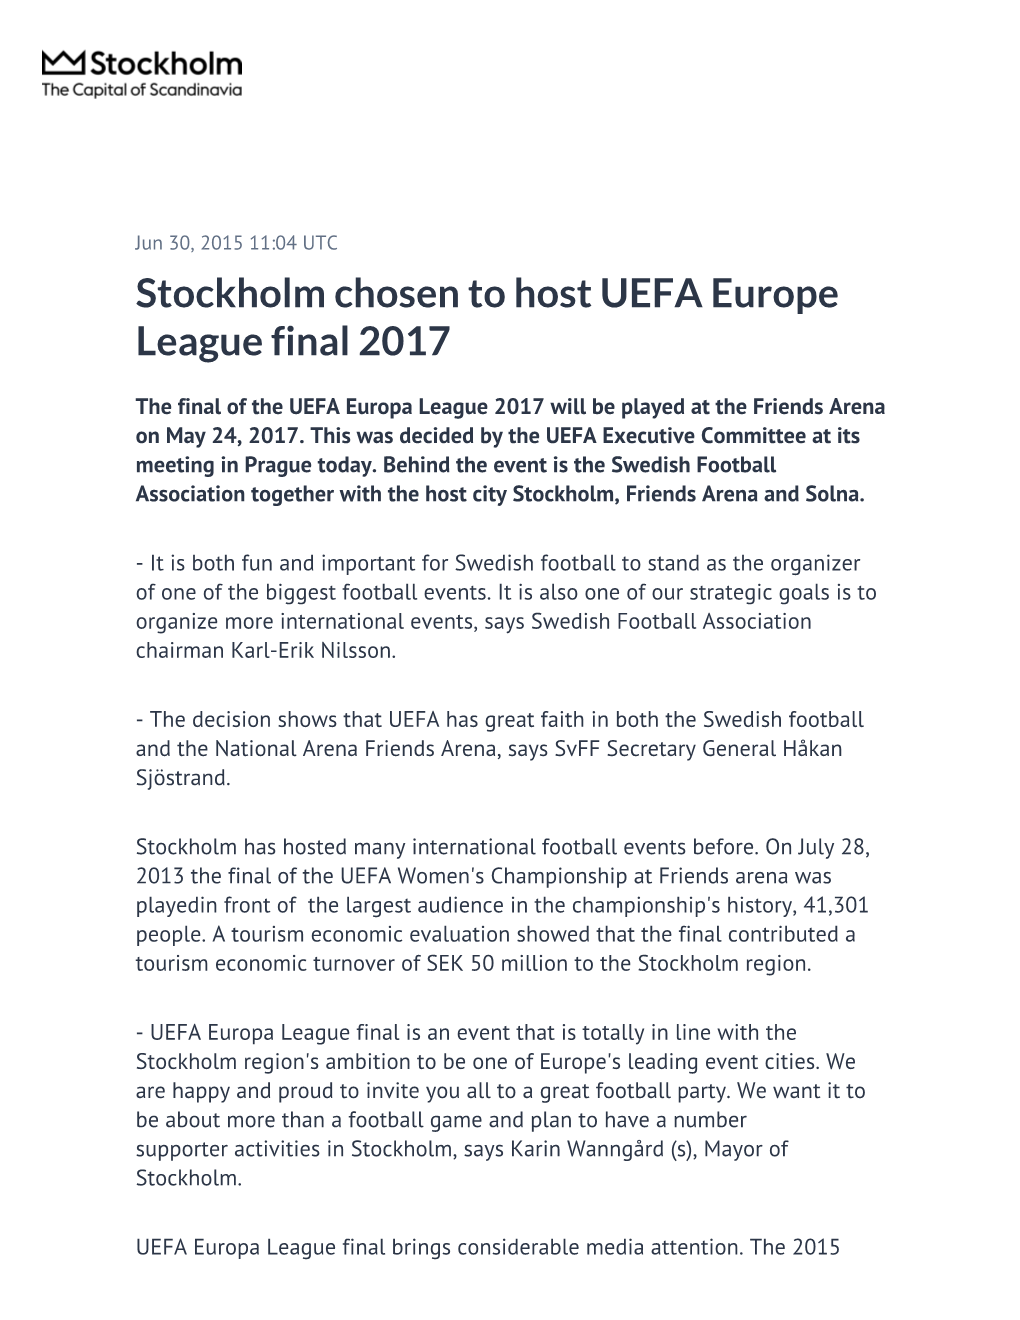 Stockholm Chosen to Host UEFA Europe League Final 2017